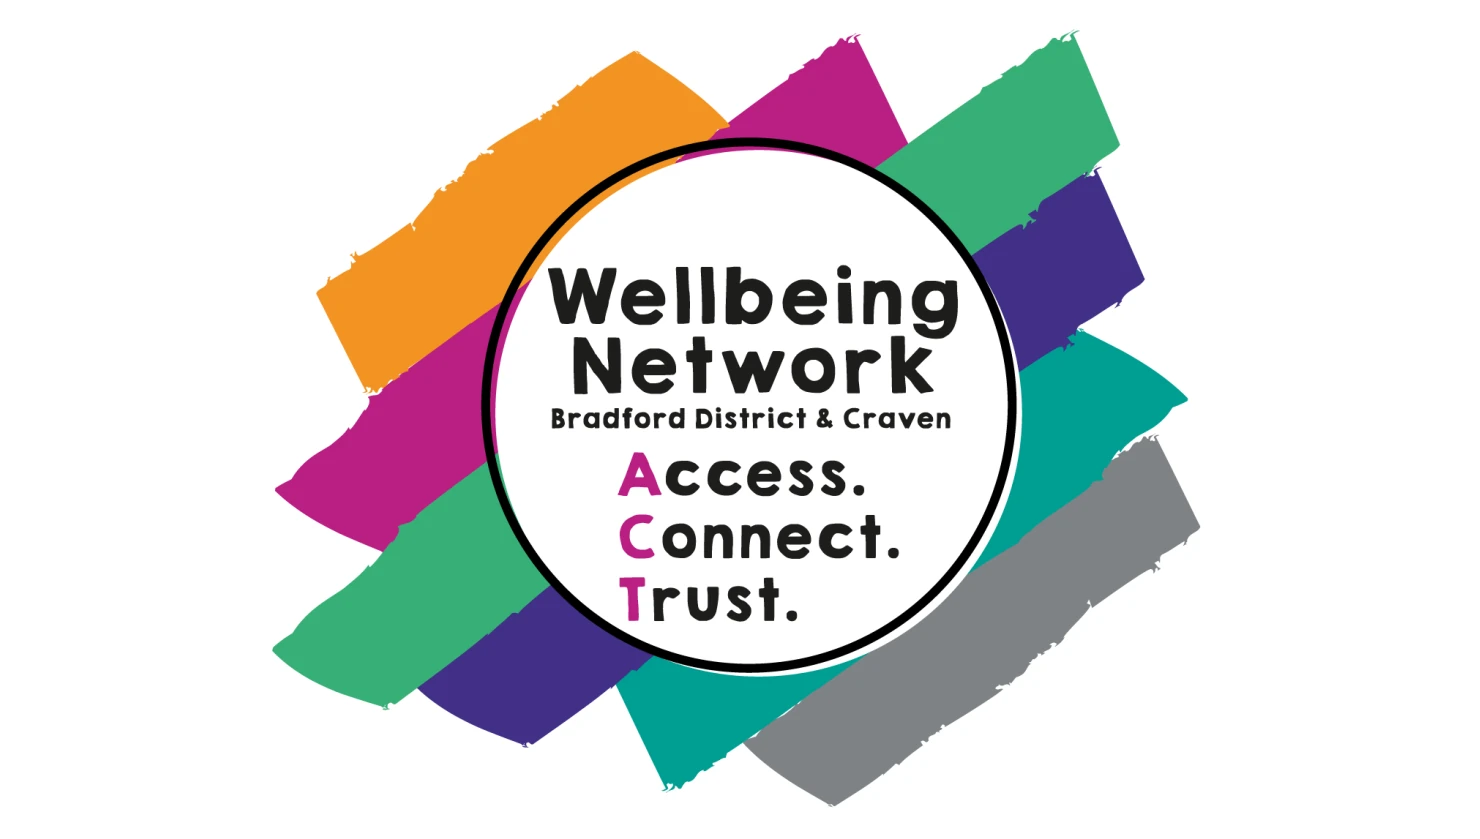 Wellbeing network logo